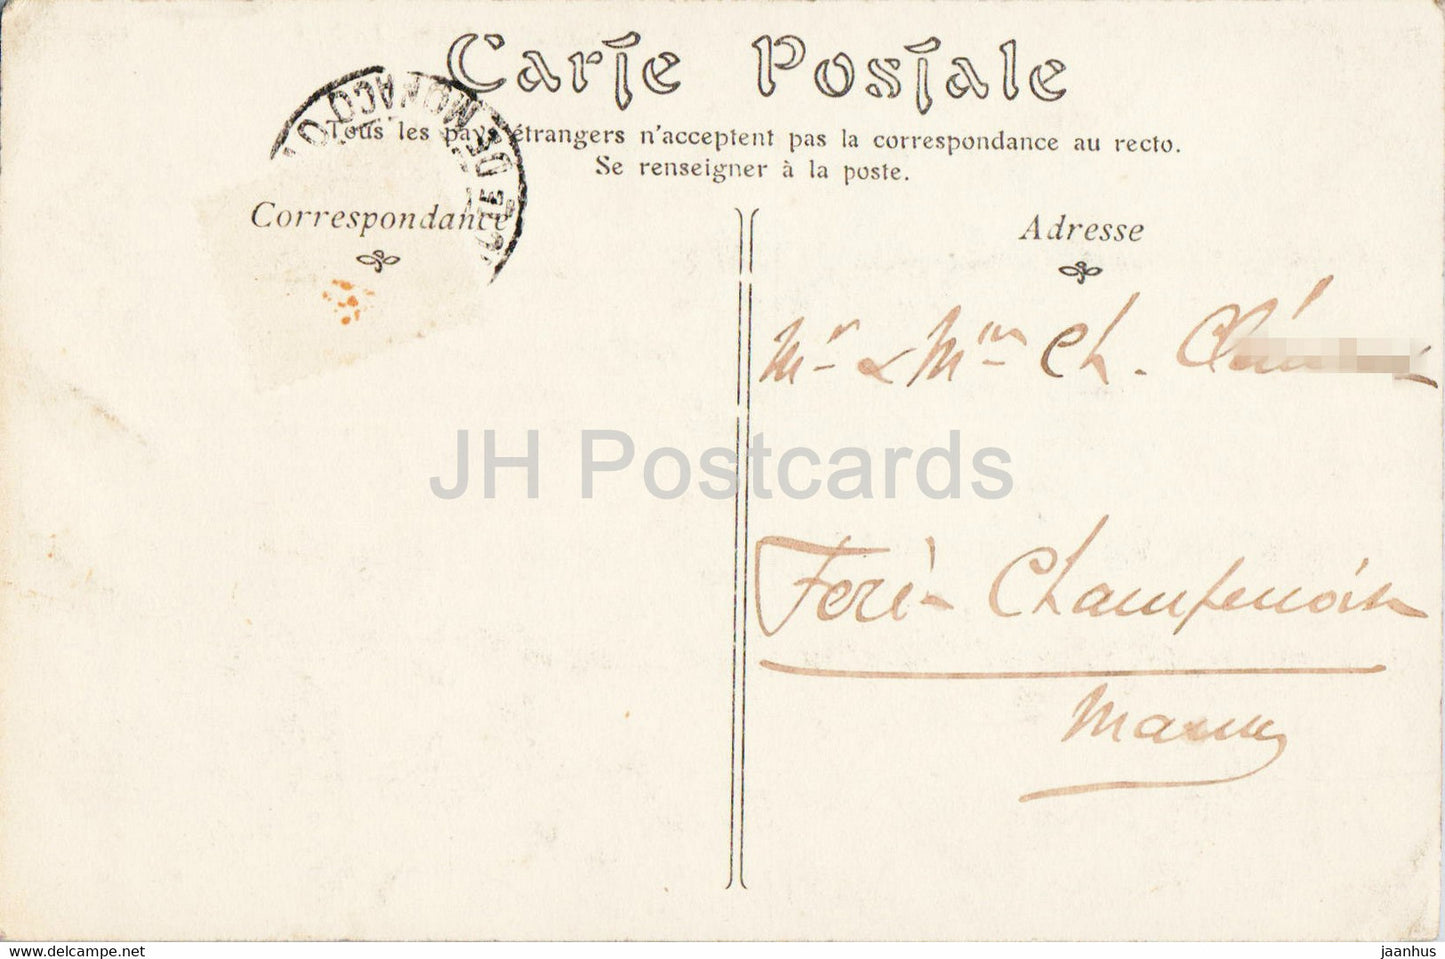 Monte Carlo - La Rampe et les Hotels - 838 - alte Postkarte - Monaco - gebraucht